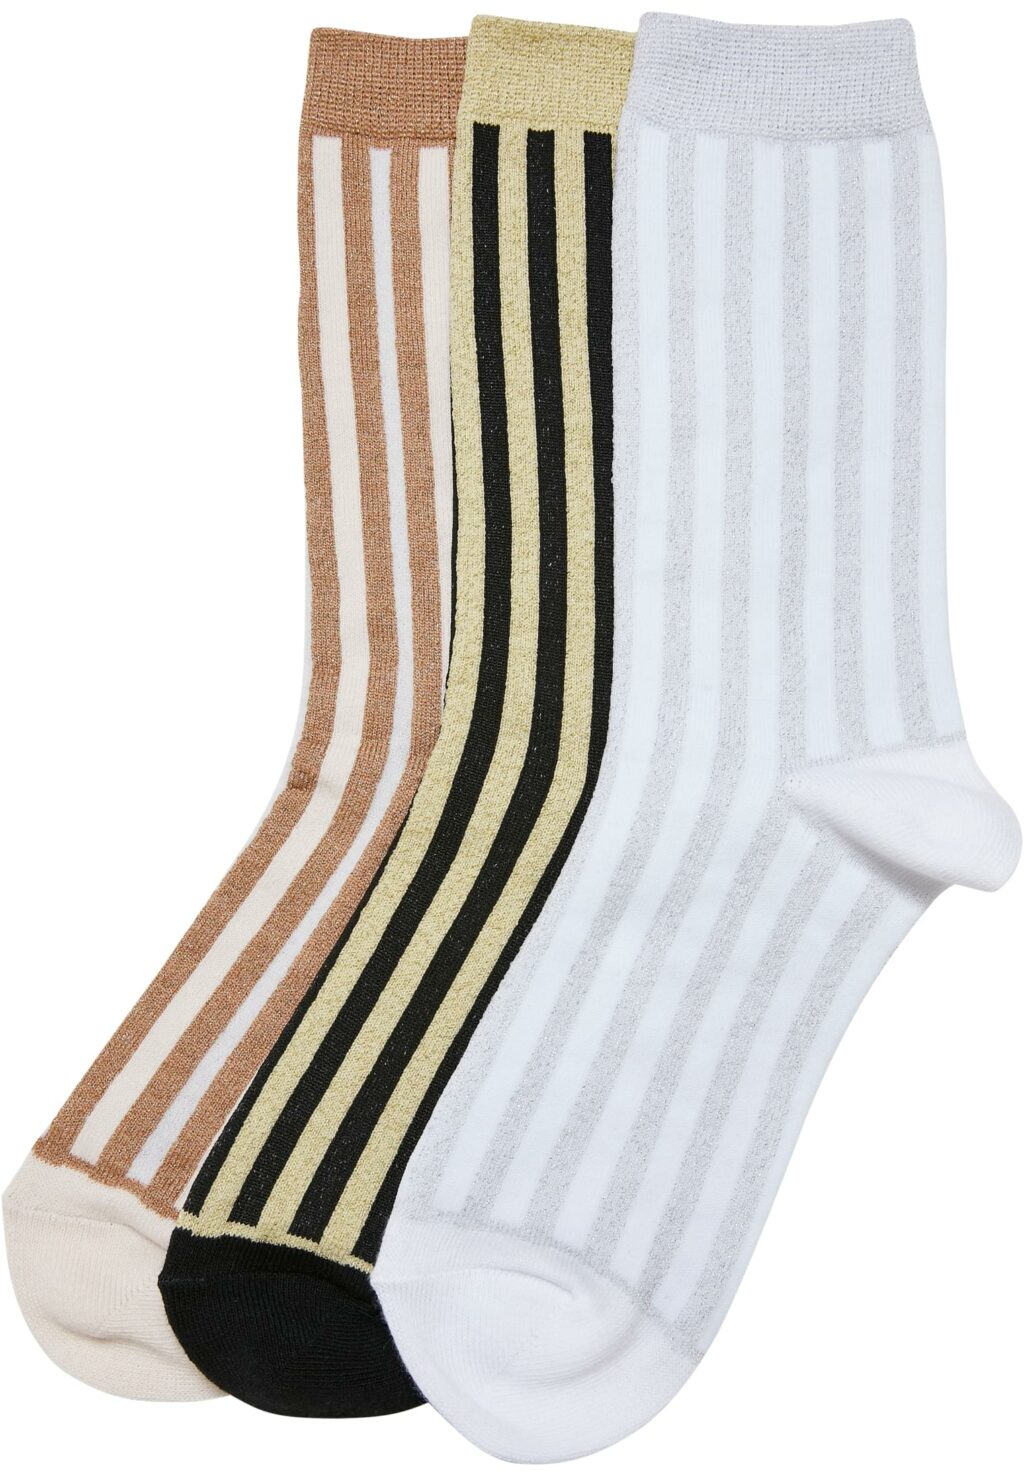 Metallic Effect Stripe Socks 3-Pack black/whitesand/white TB5667